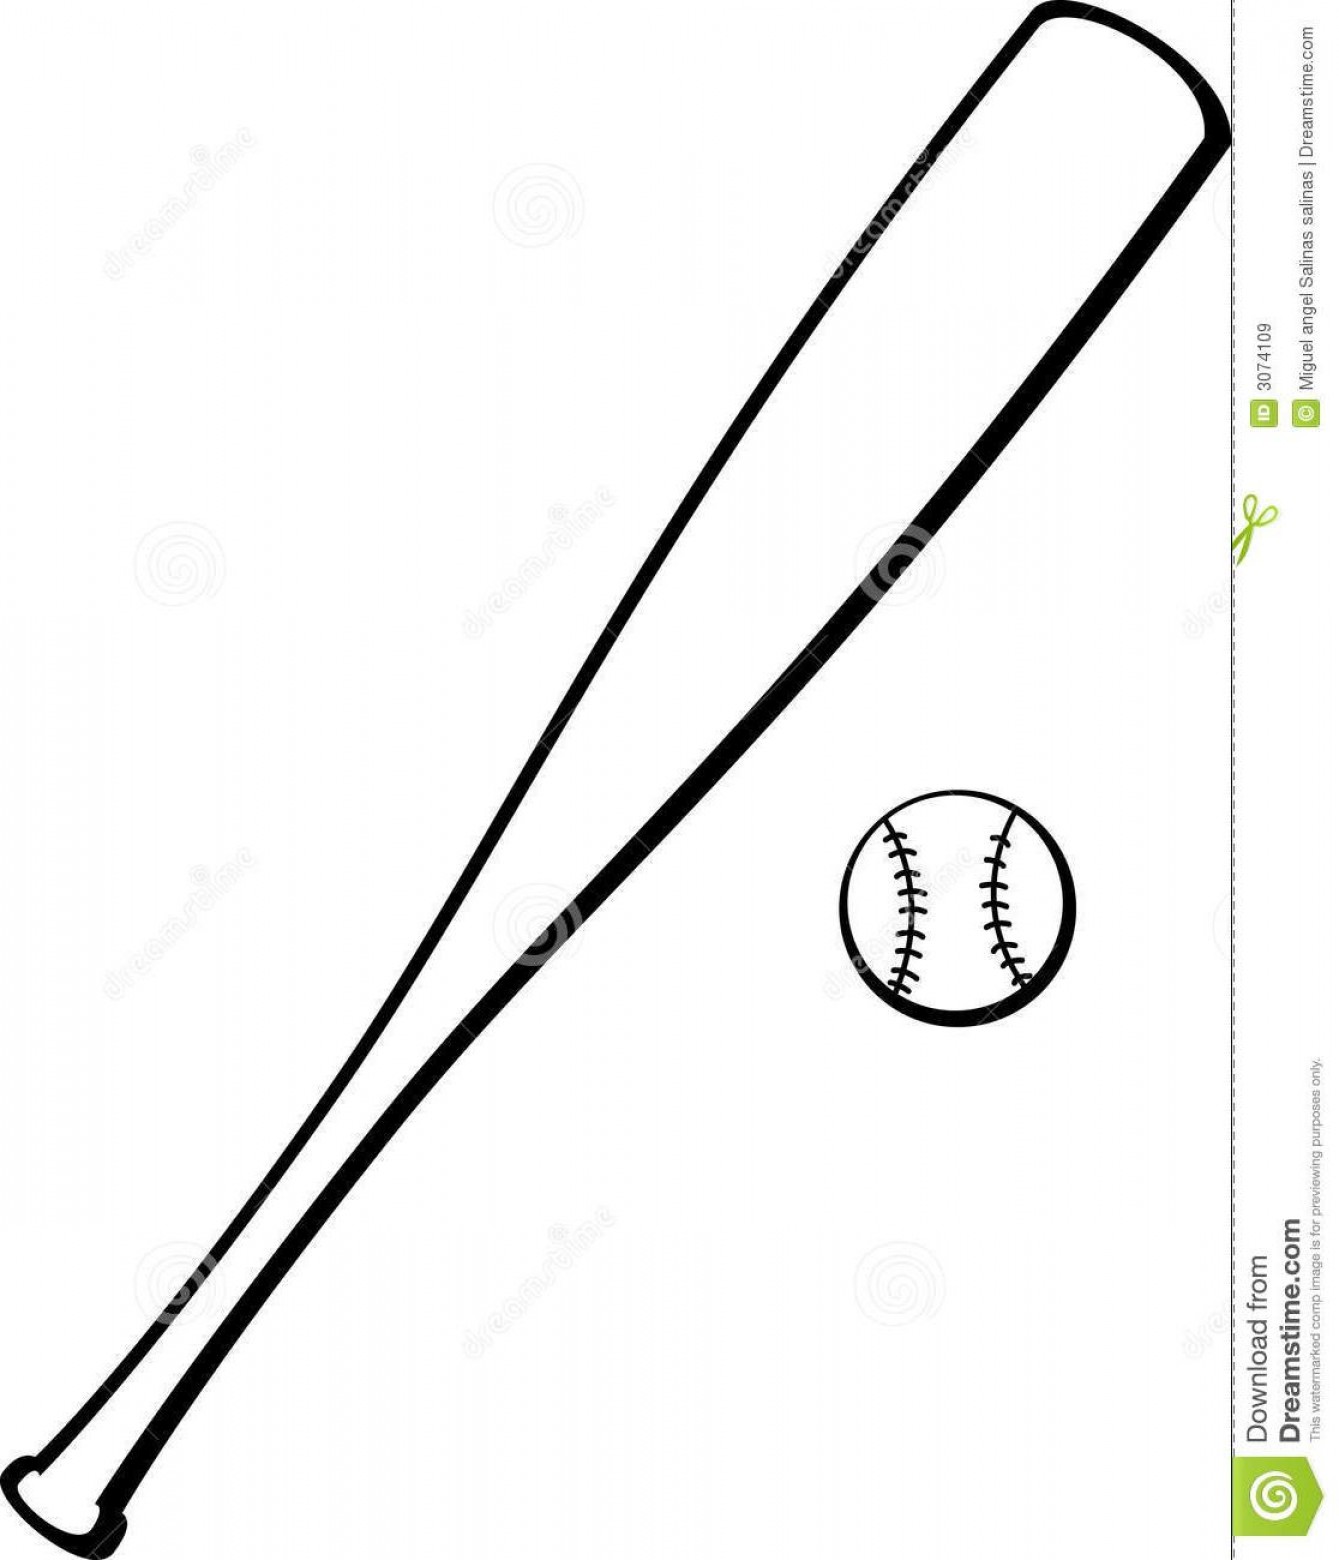 Hd Baseball Bat Outline Clip Art File Free.